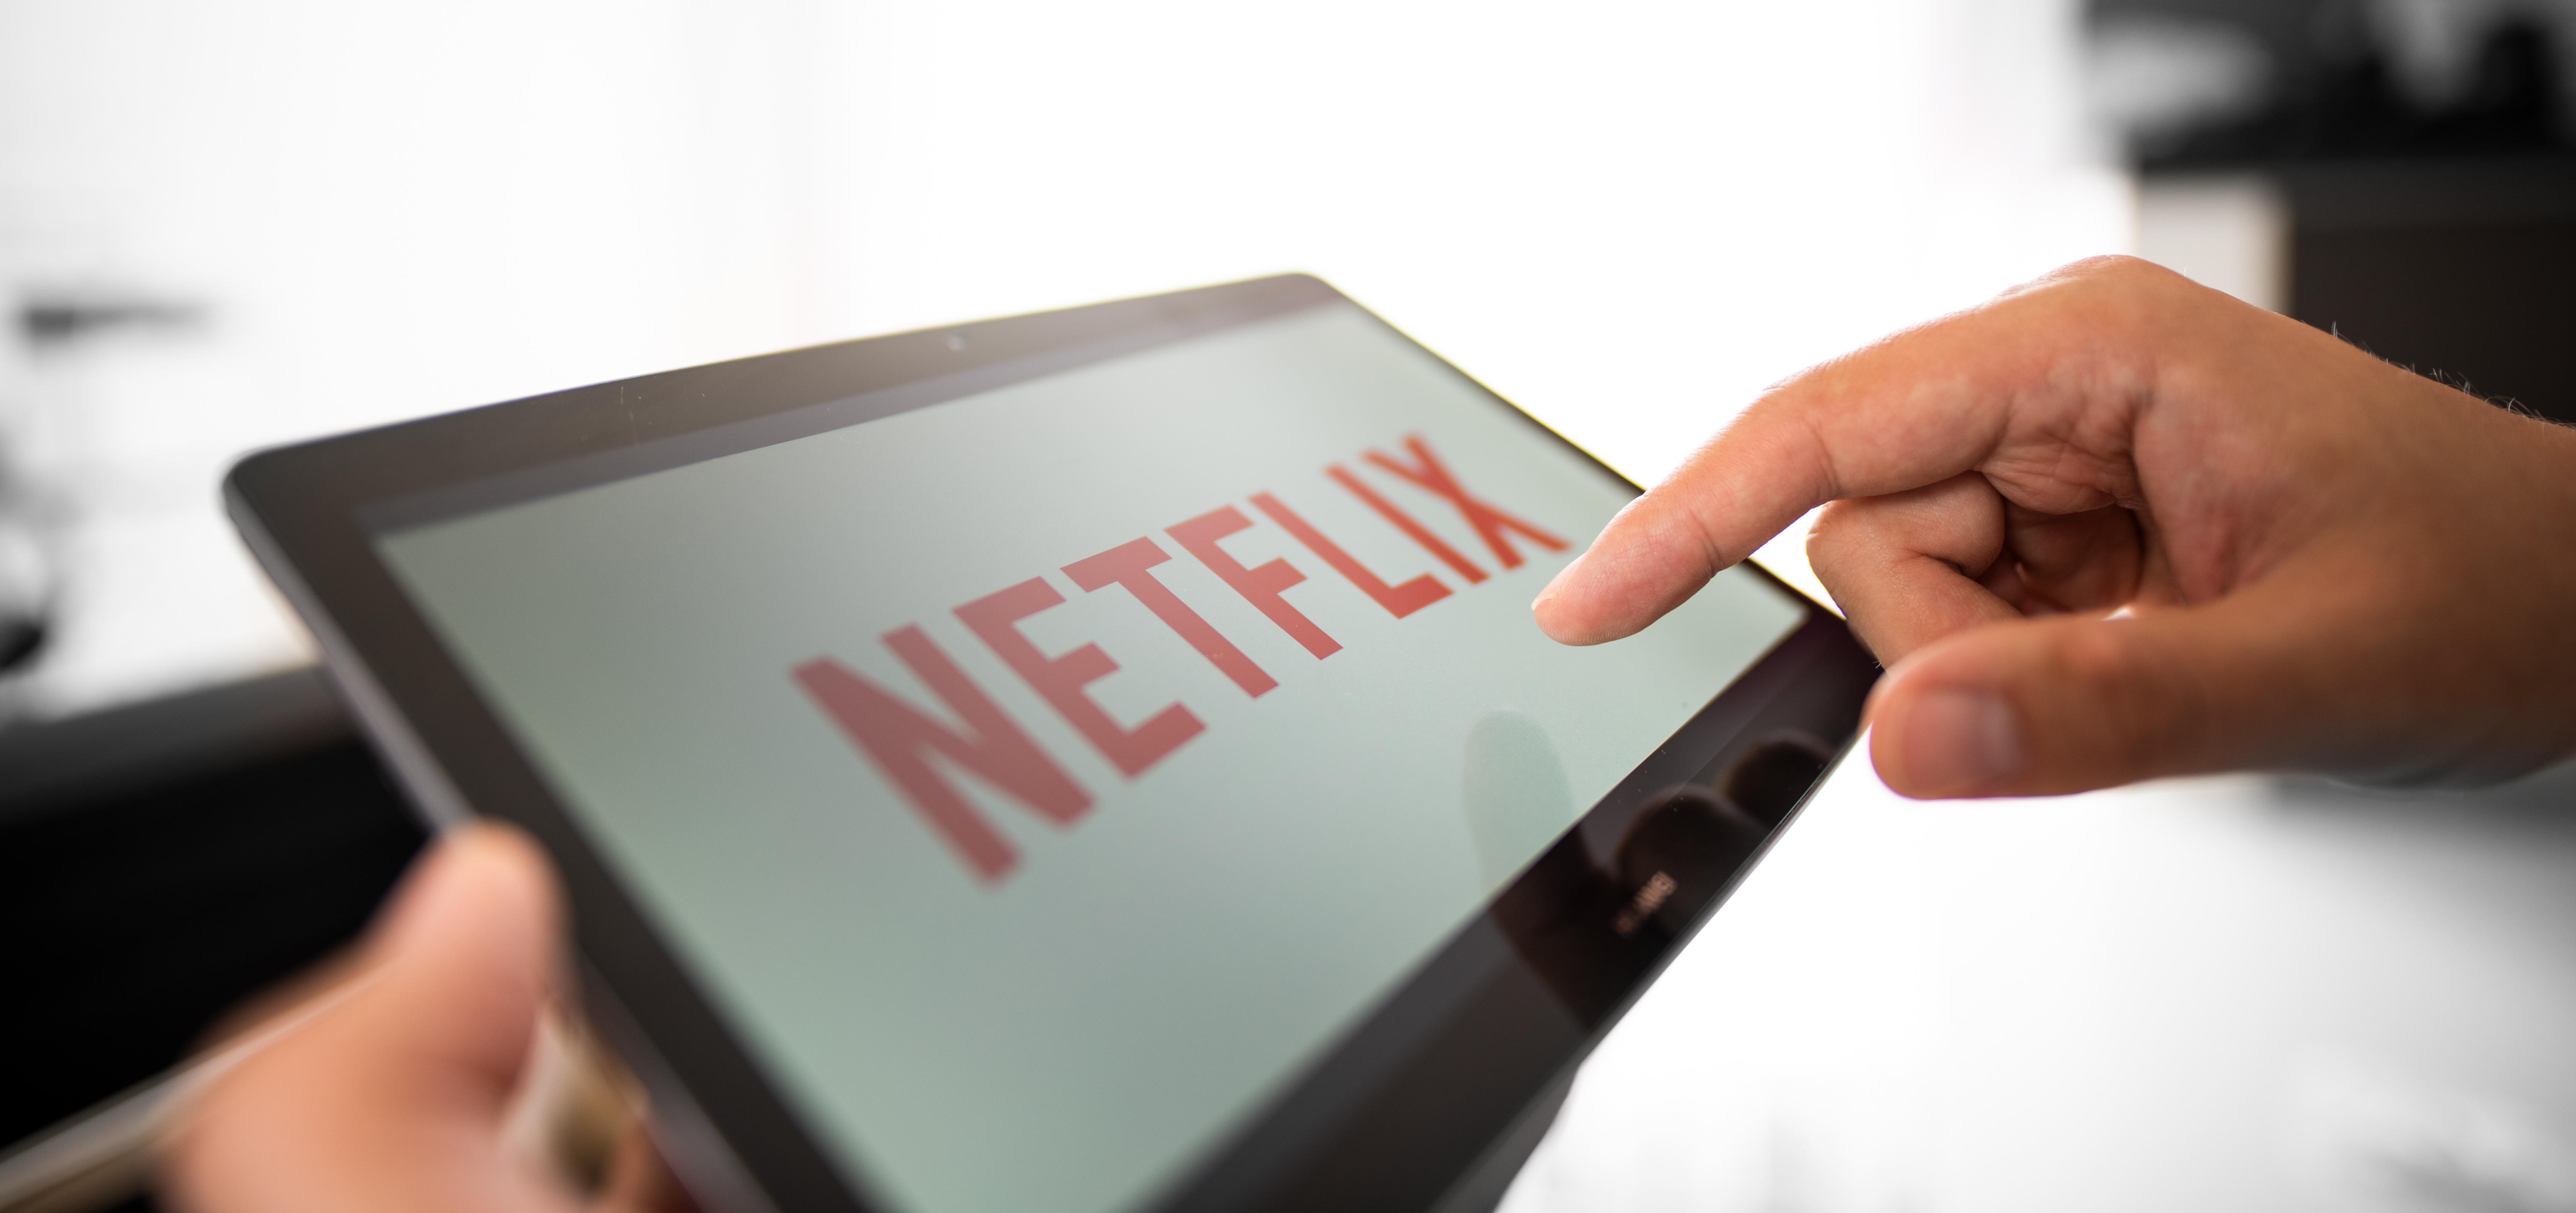 Hand reaches toward Netflix logo on screen